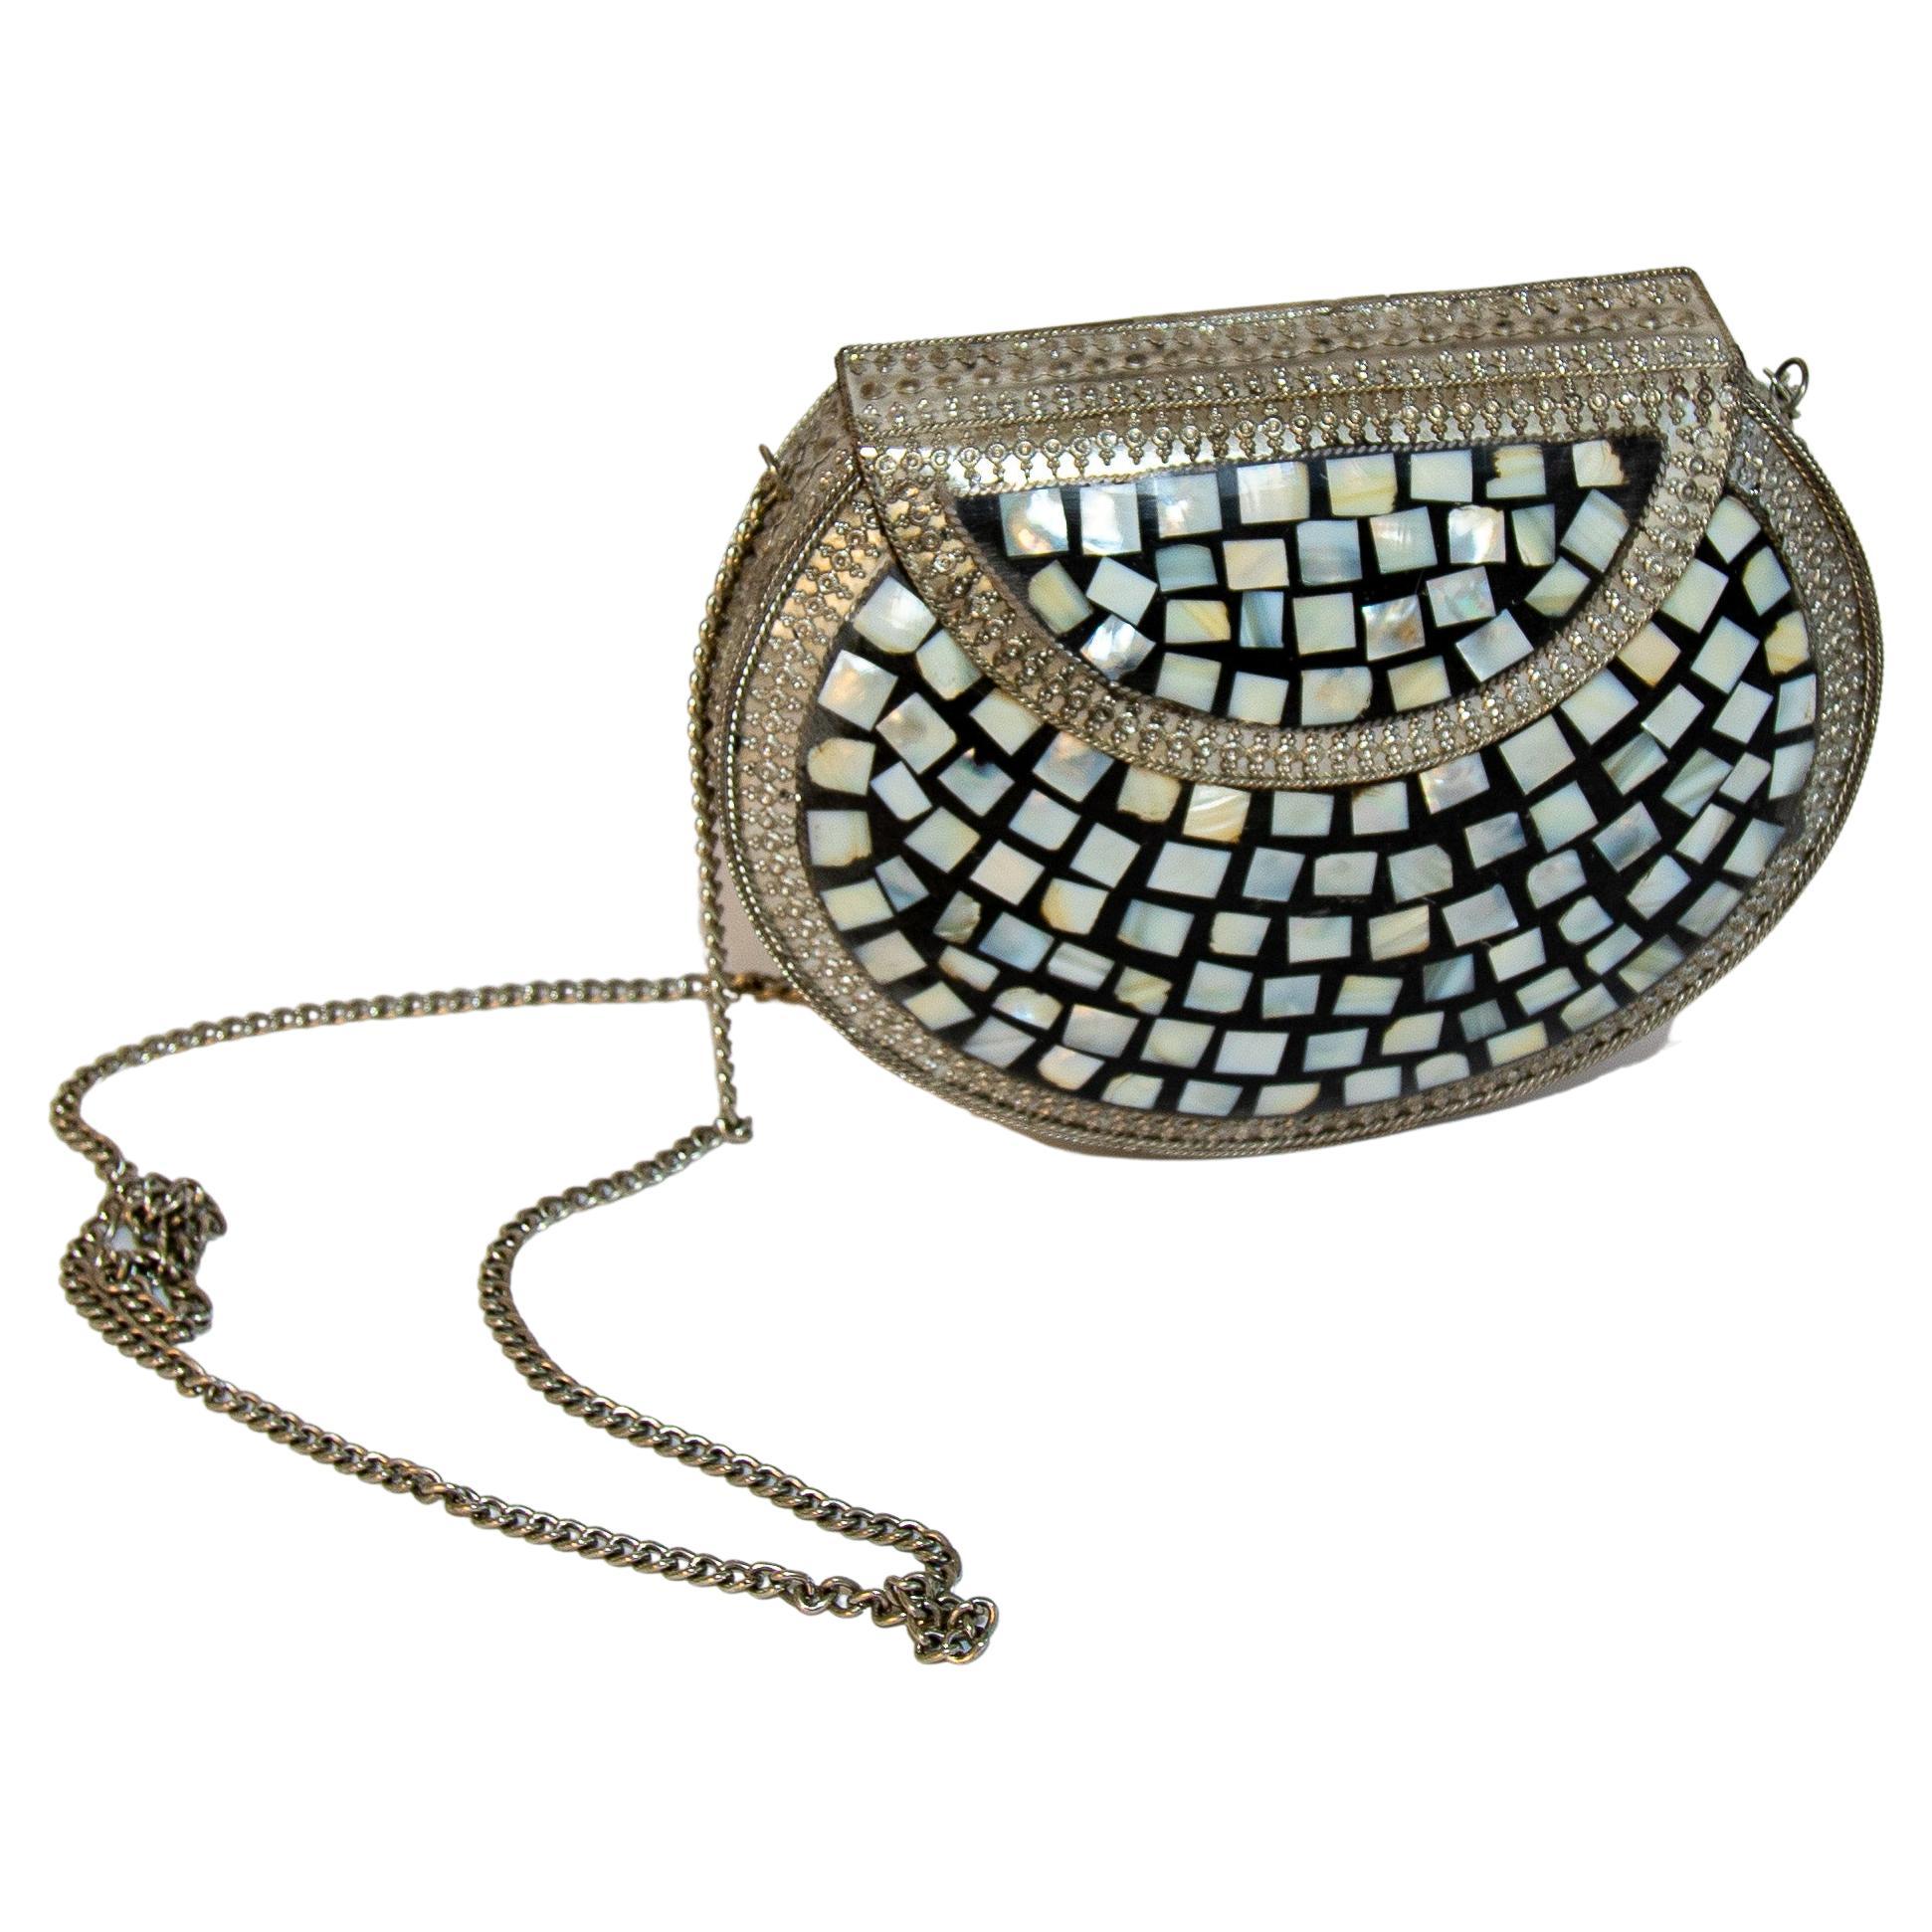 Silver metal Clutch | Silver clutch purse, Fancy purses, Silver purses